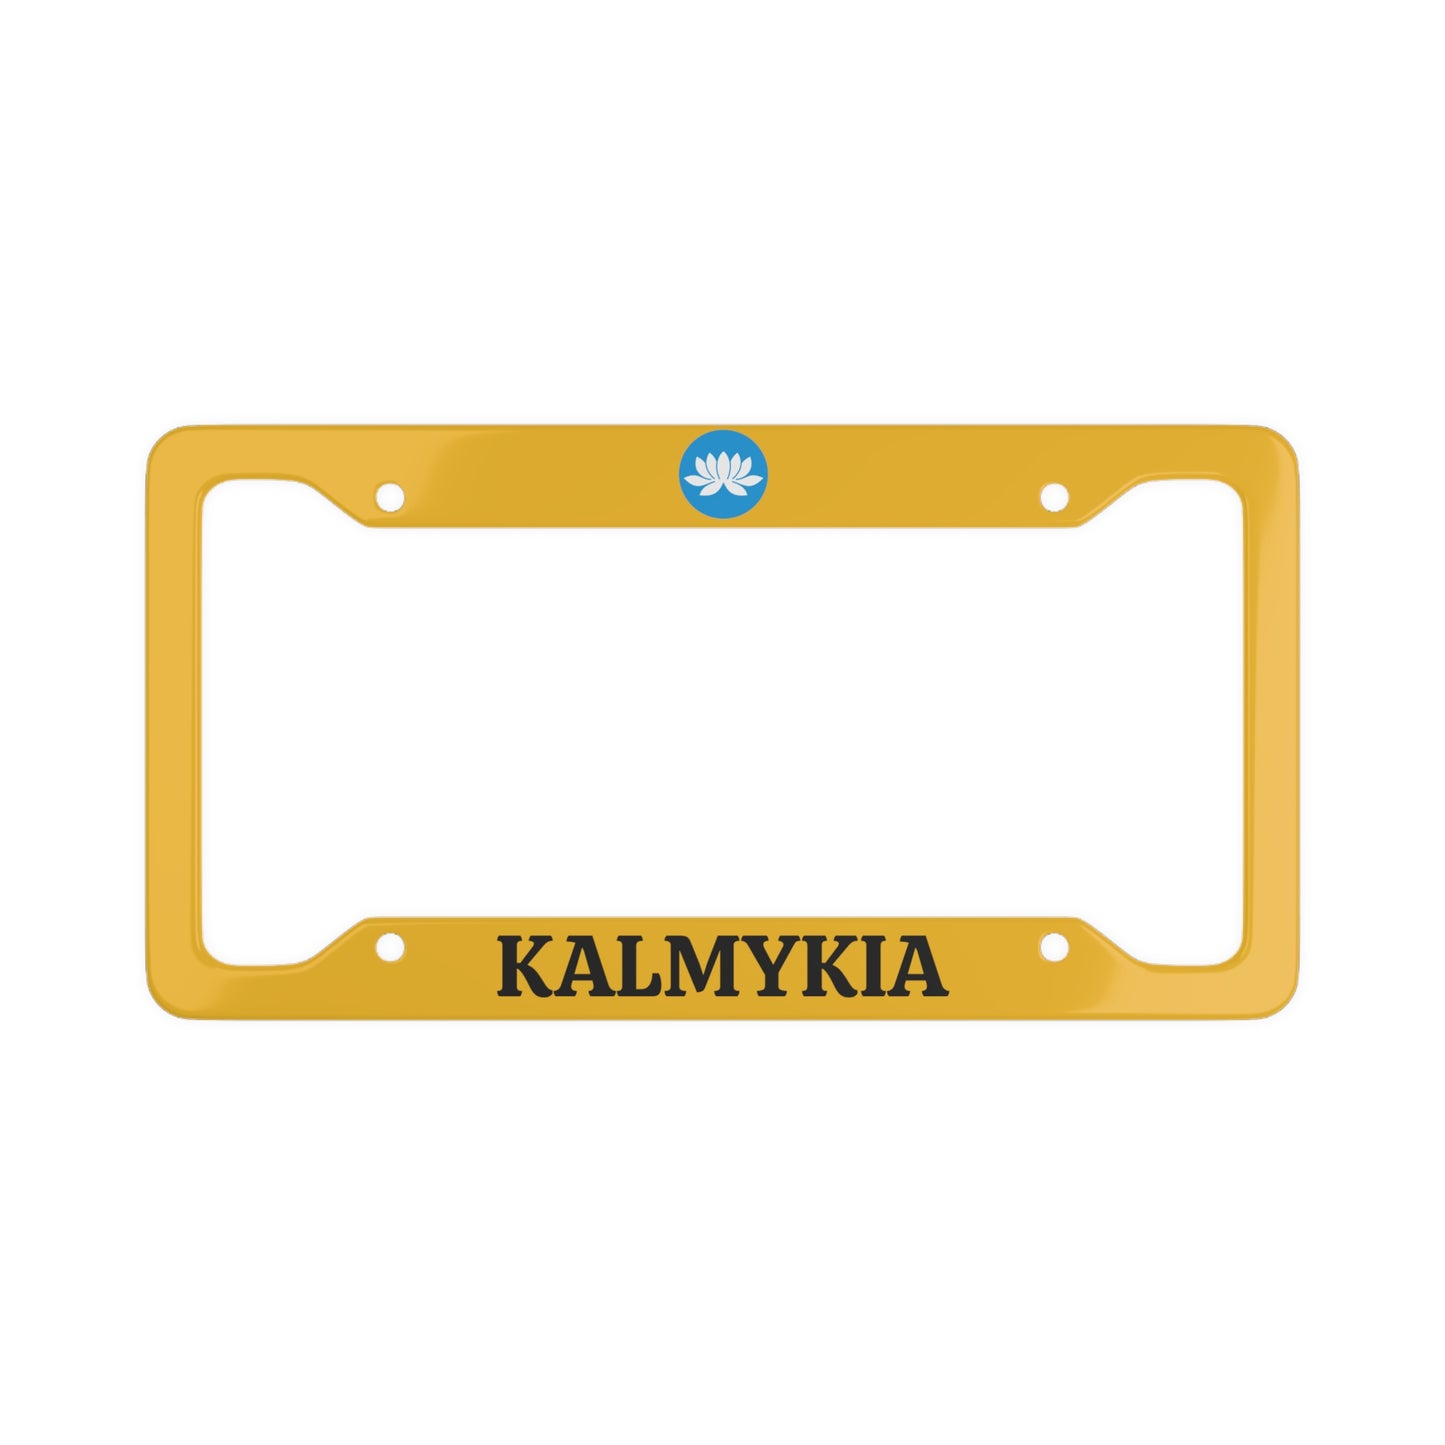 Kalmykia Colorful License Plate Frame